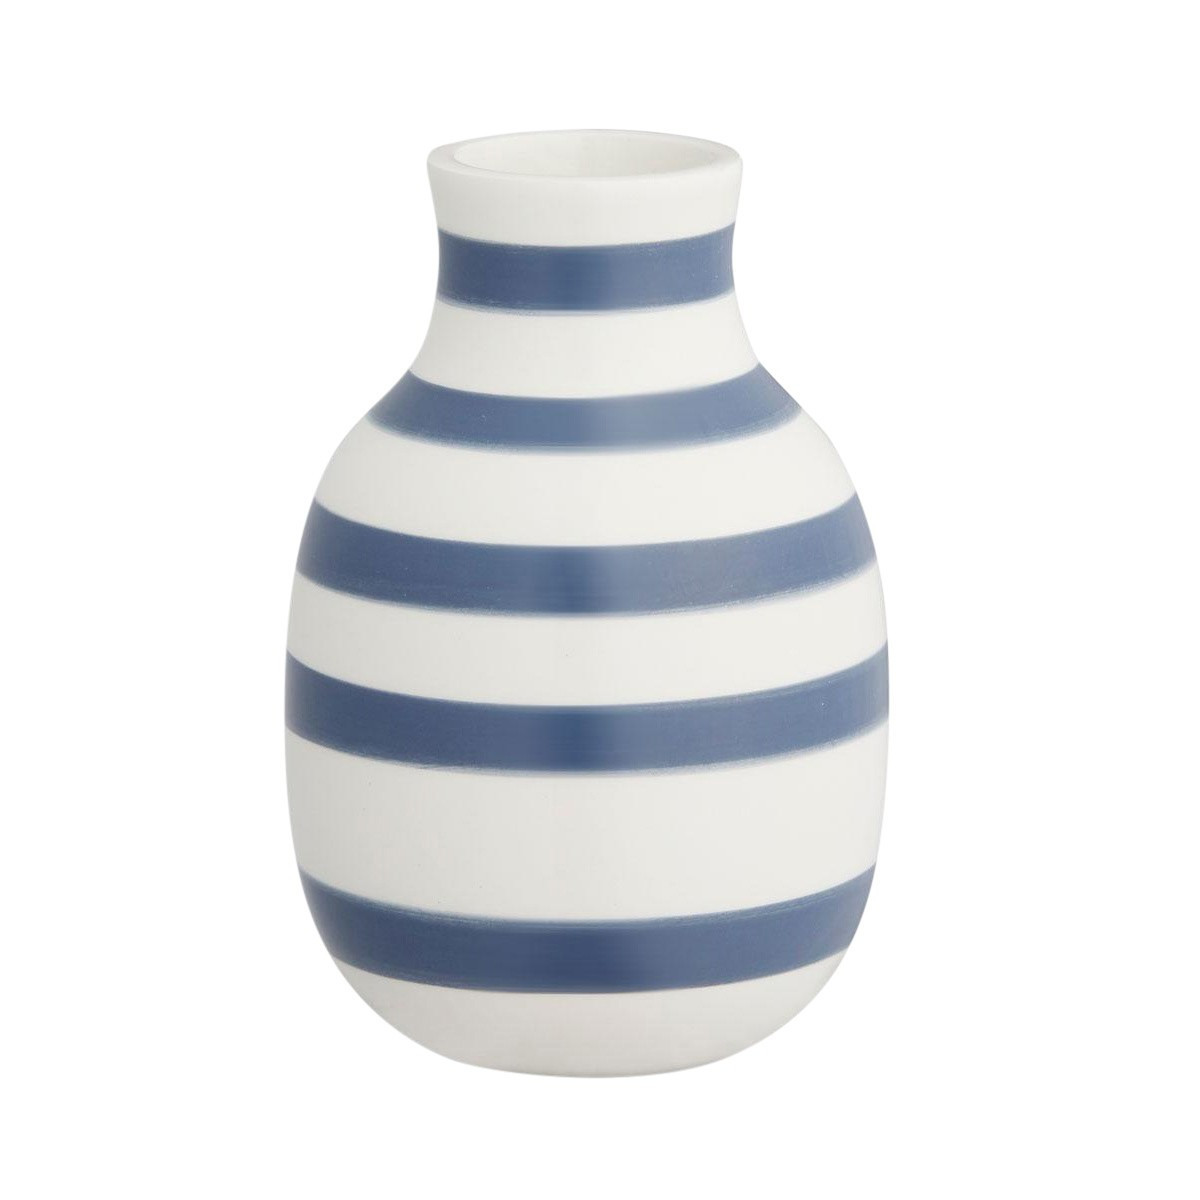 17 Fashionable Blue Ceramic Vase 2024 free download blue ceramic vase of kac2a4hler omaggio vase h 12 5cm ambientedirect intended for kaehler omaggio vase h 12 5cm 1200x1200 id1921281 bbdf8a04da4e72bde5efff5fa2586947